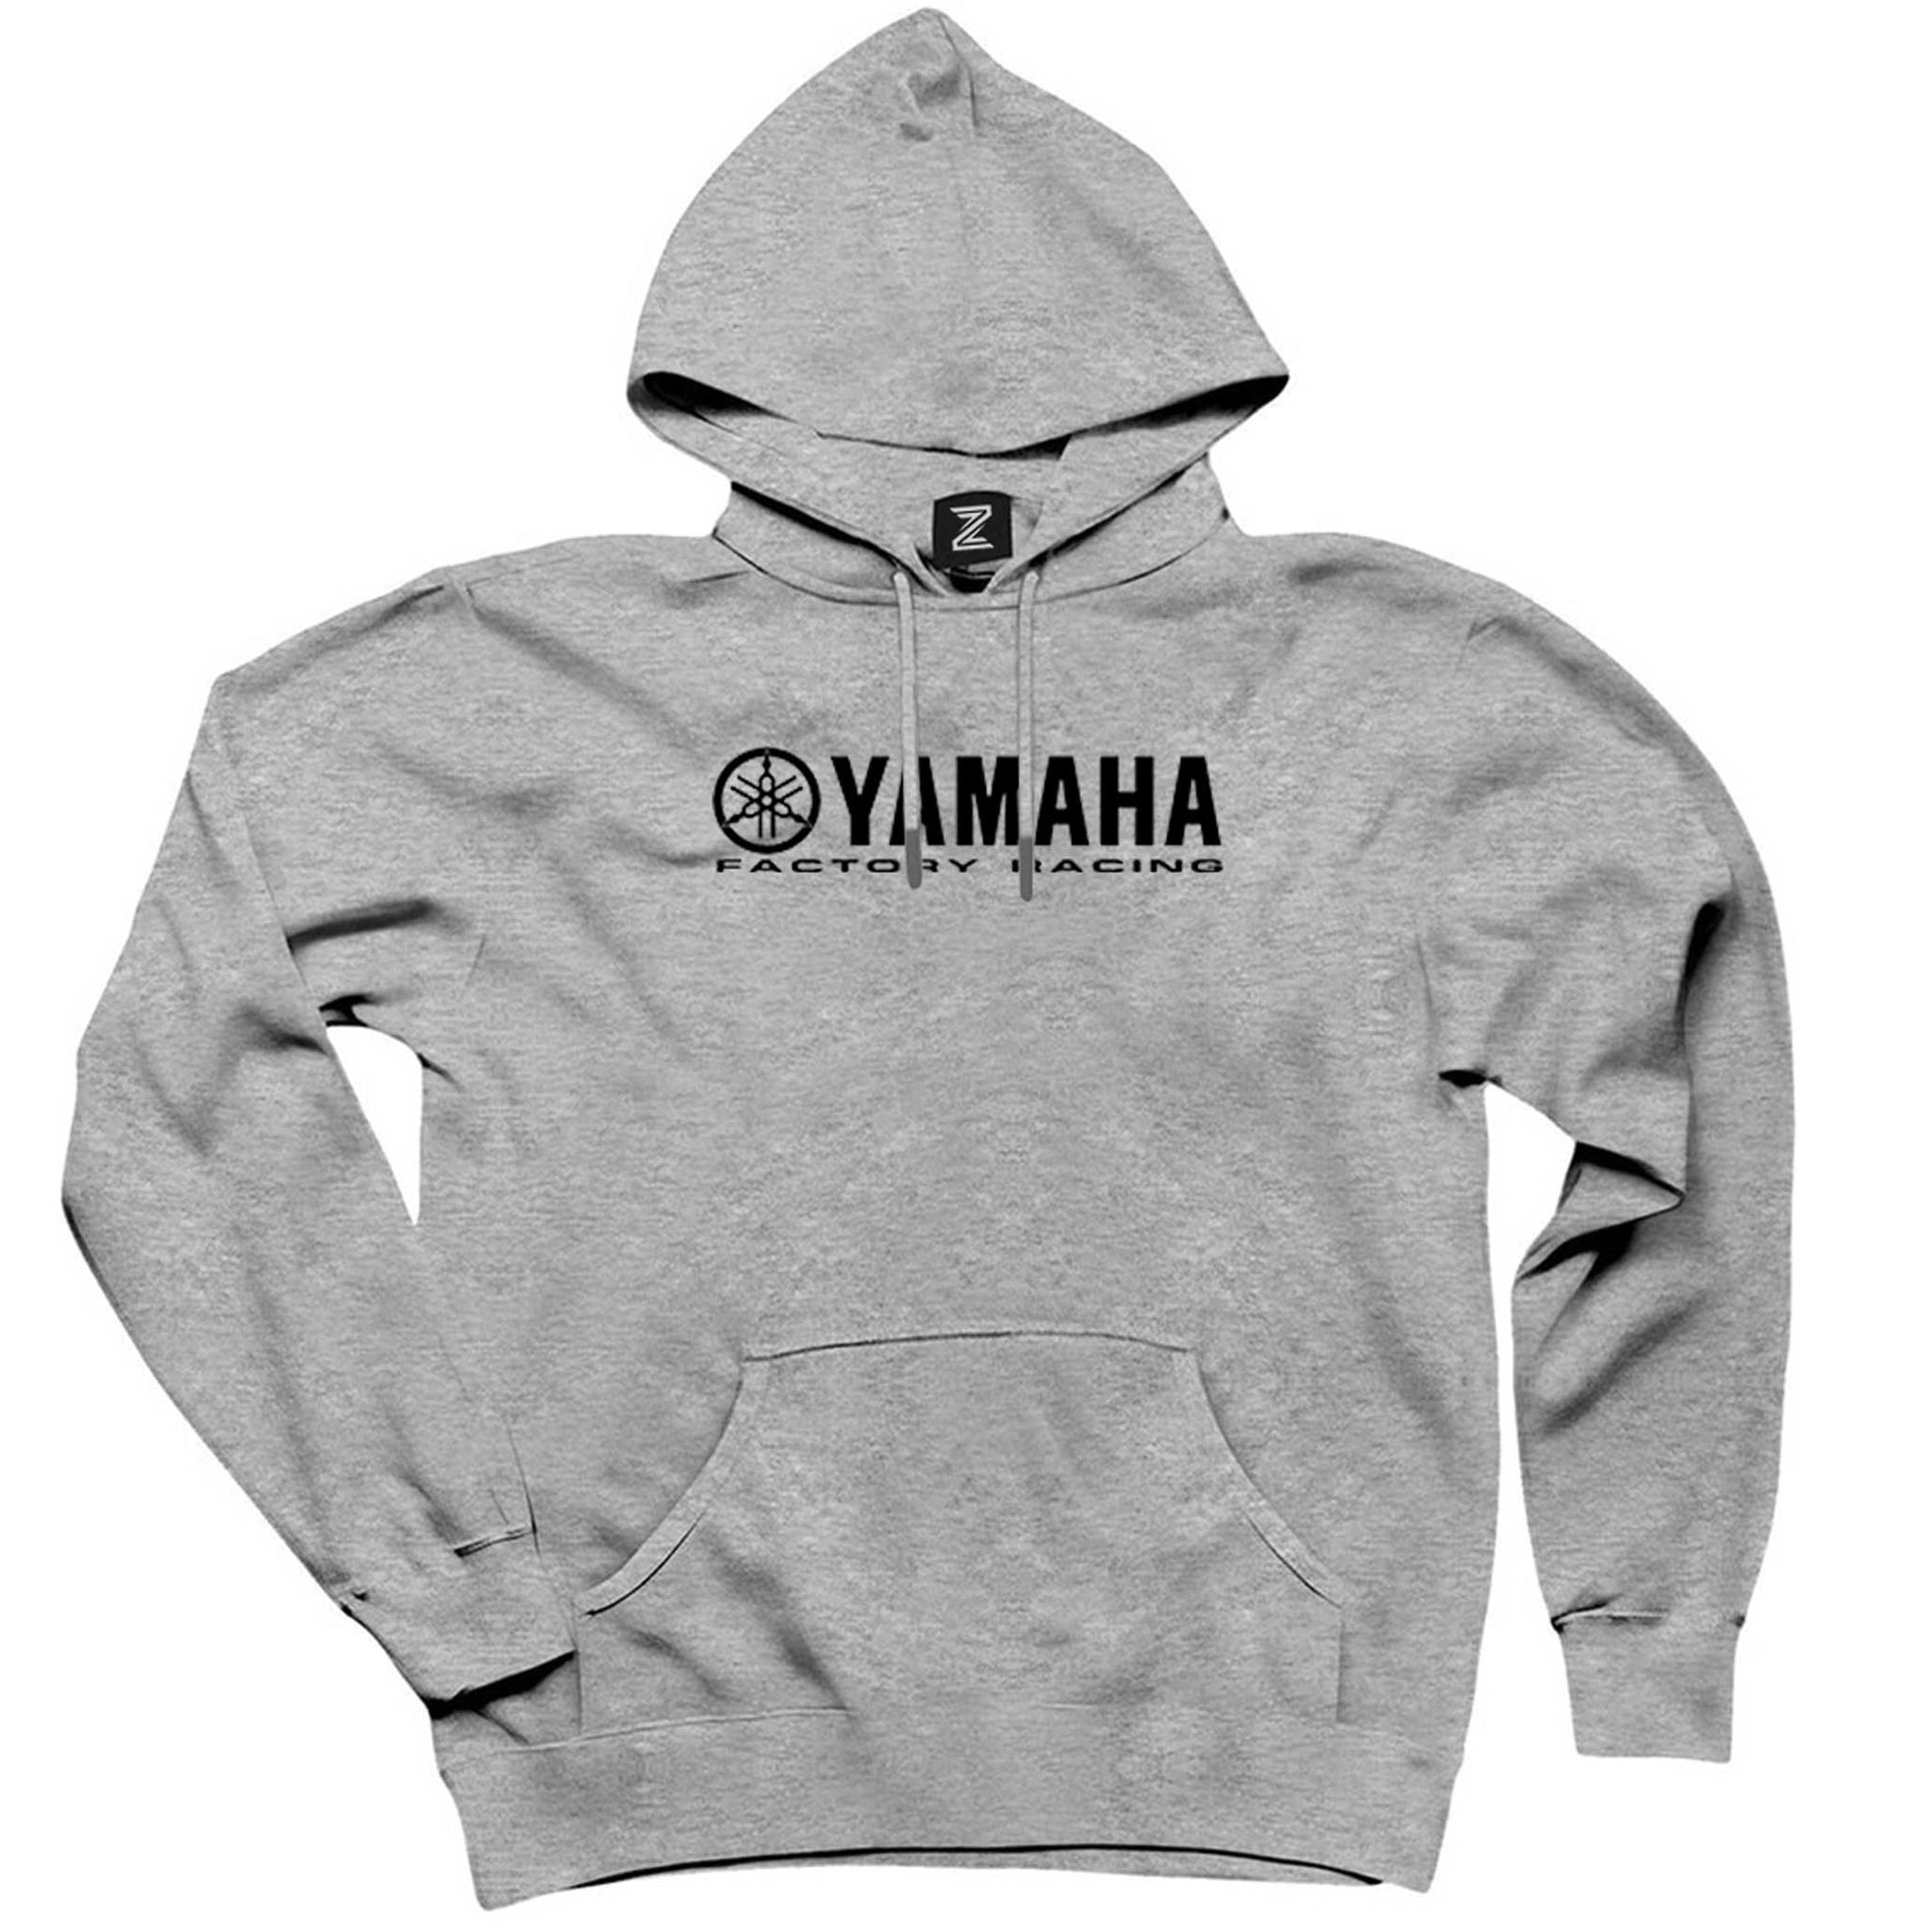 Yamaha Factory Racing Gri Kapşonlu Sweatshirt Hoodie